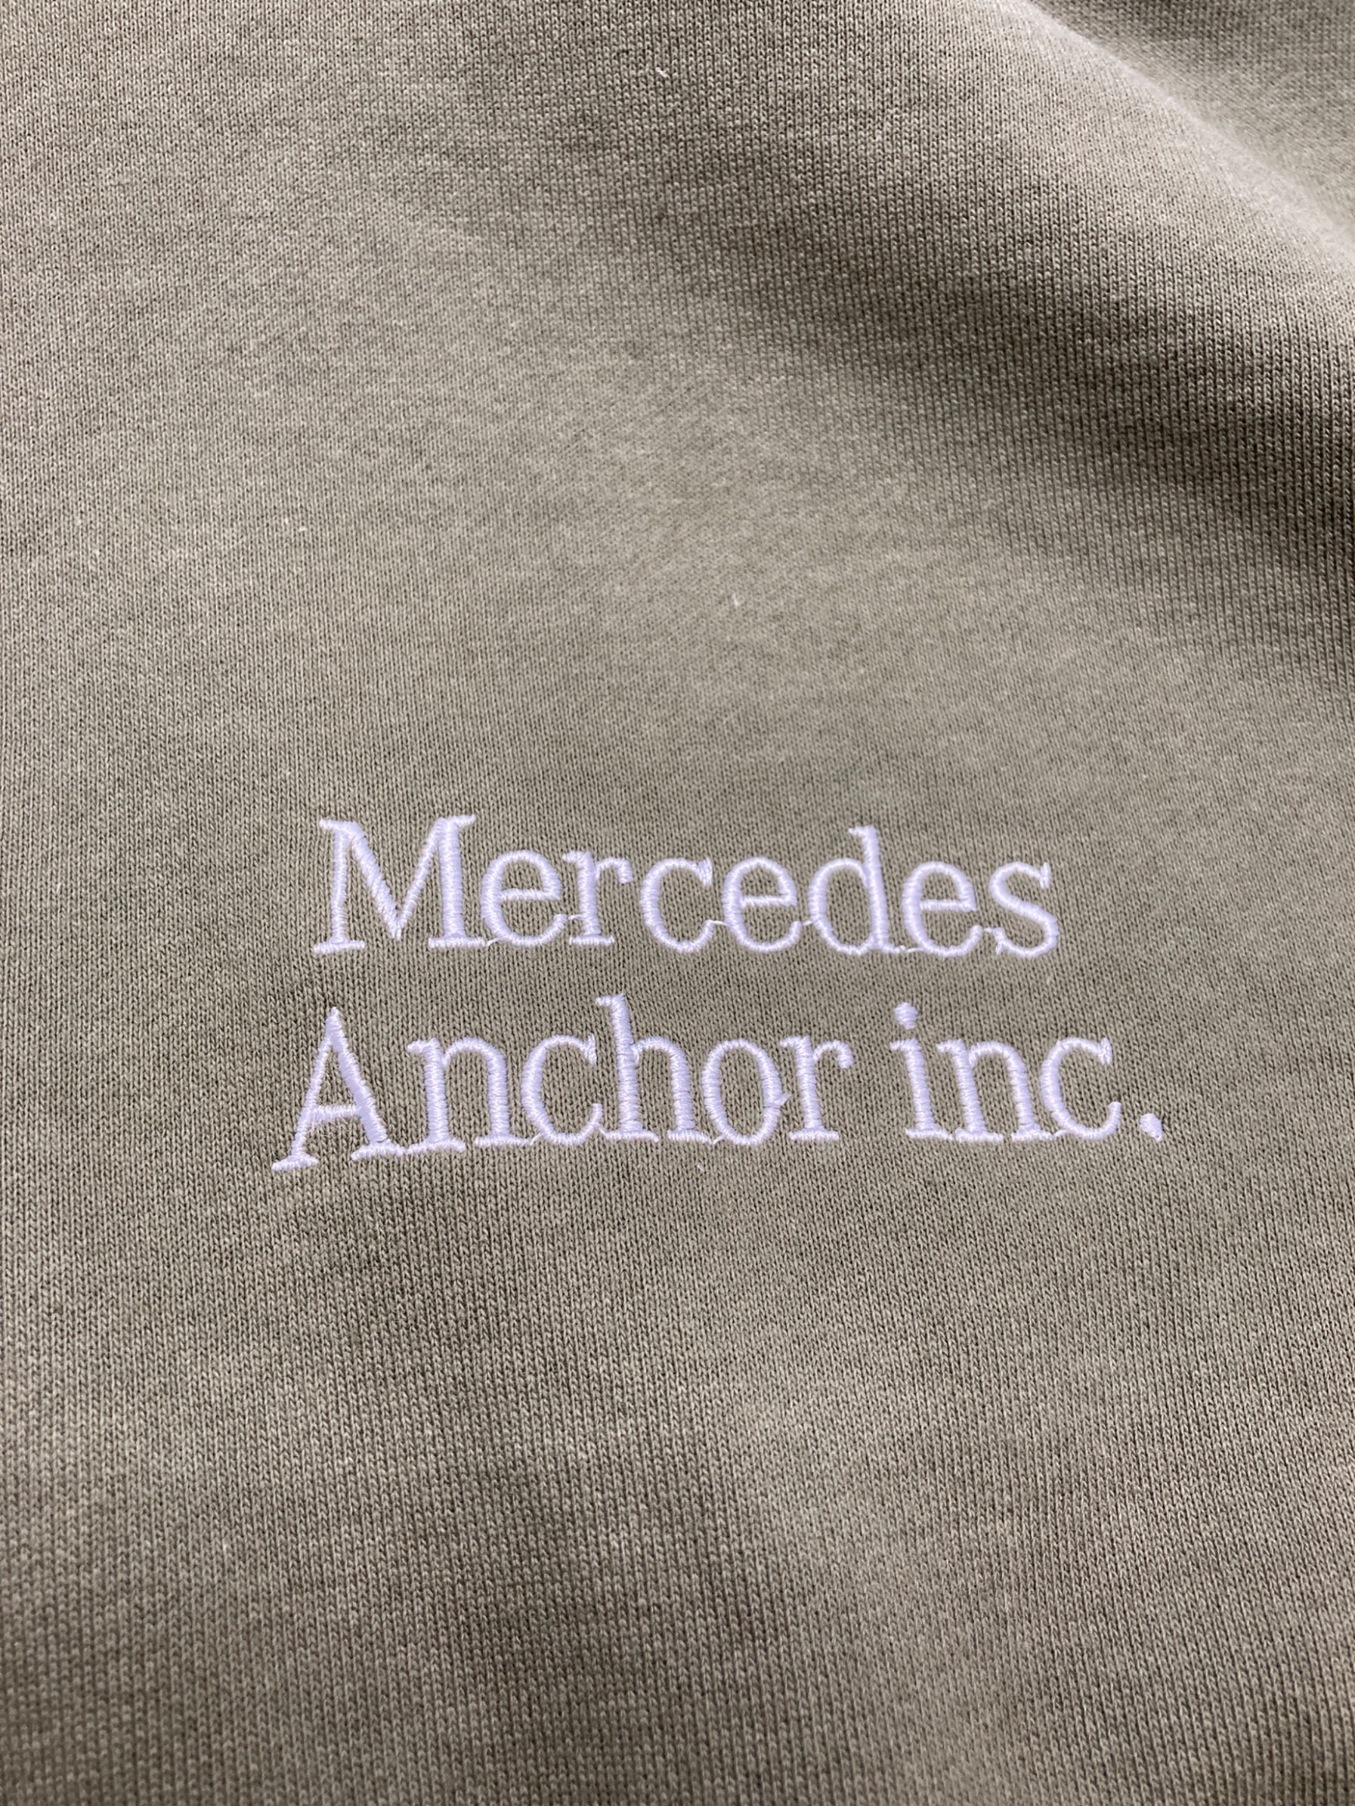 mercedes anchor inc logo hoodieメンズ